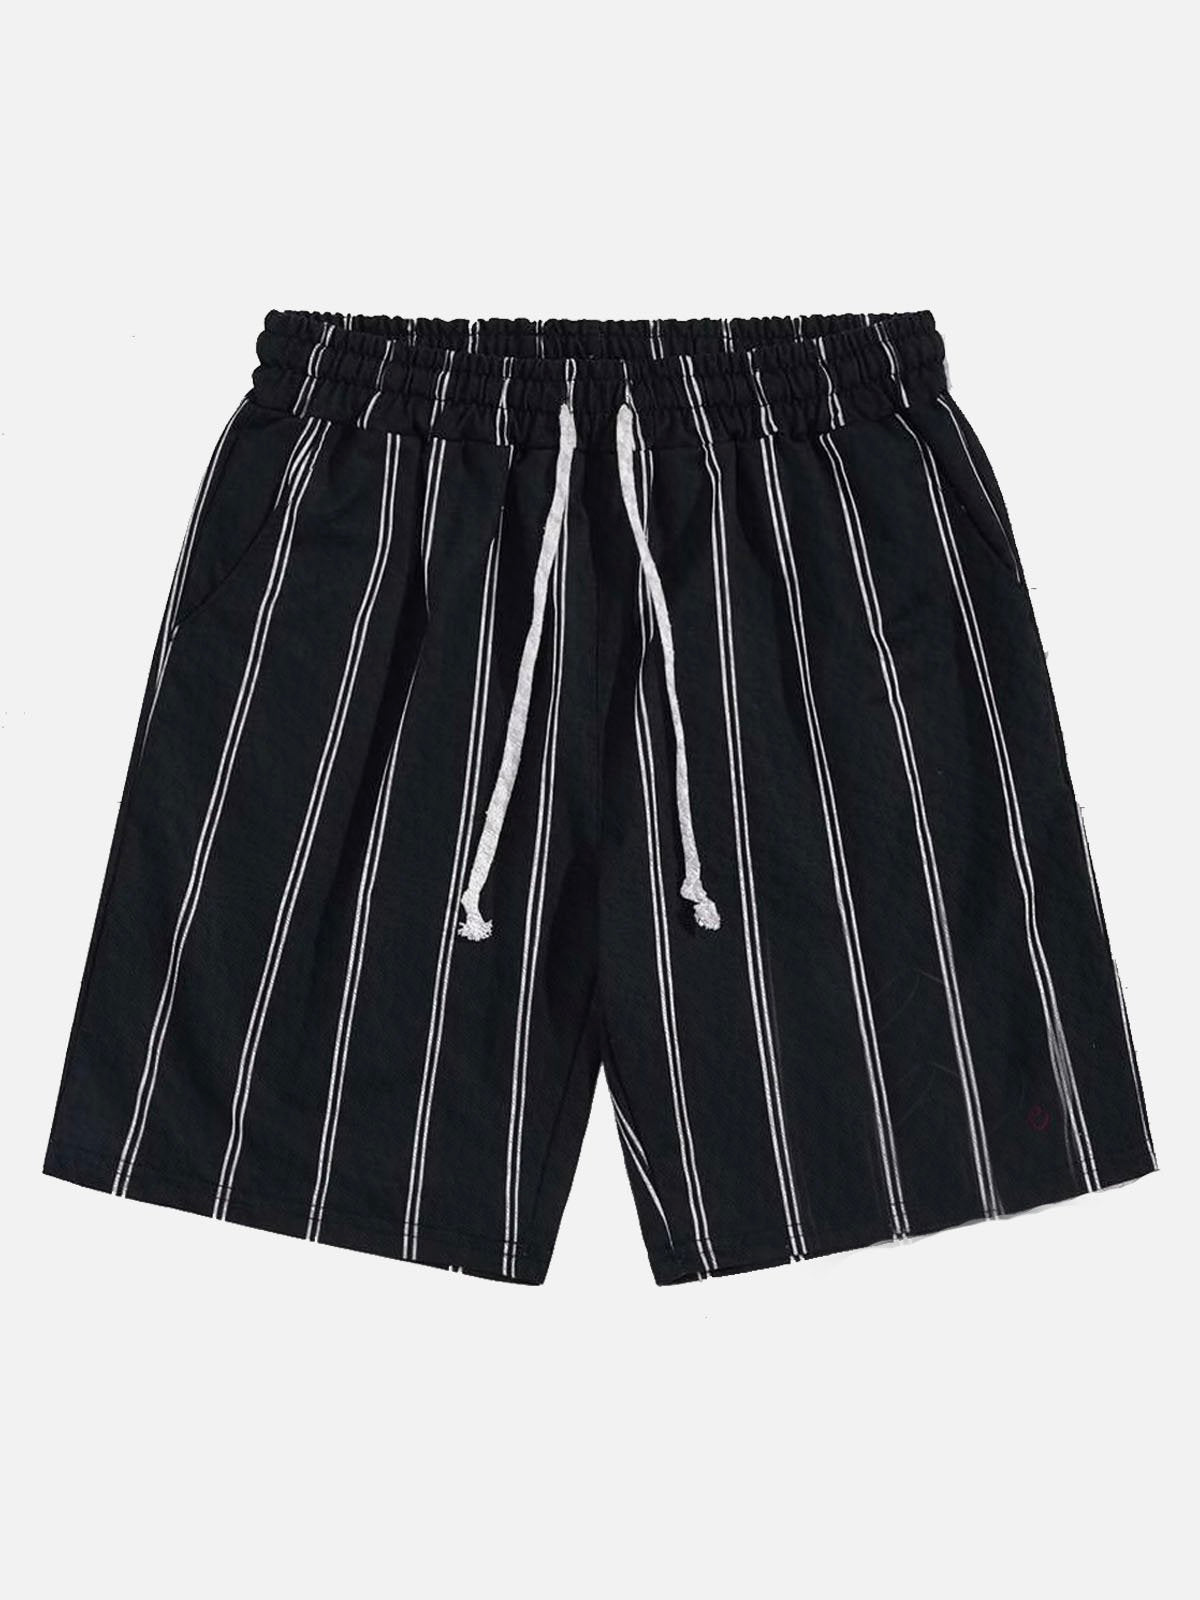 Men's Casual Basic Seekers Wrinkle-Free Beach Stripe Drawstring Shorts